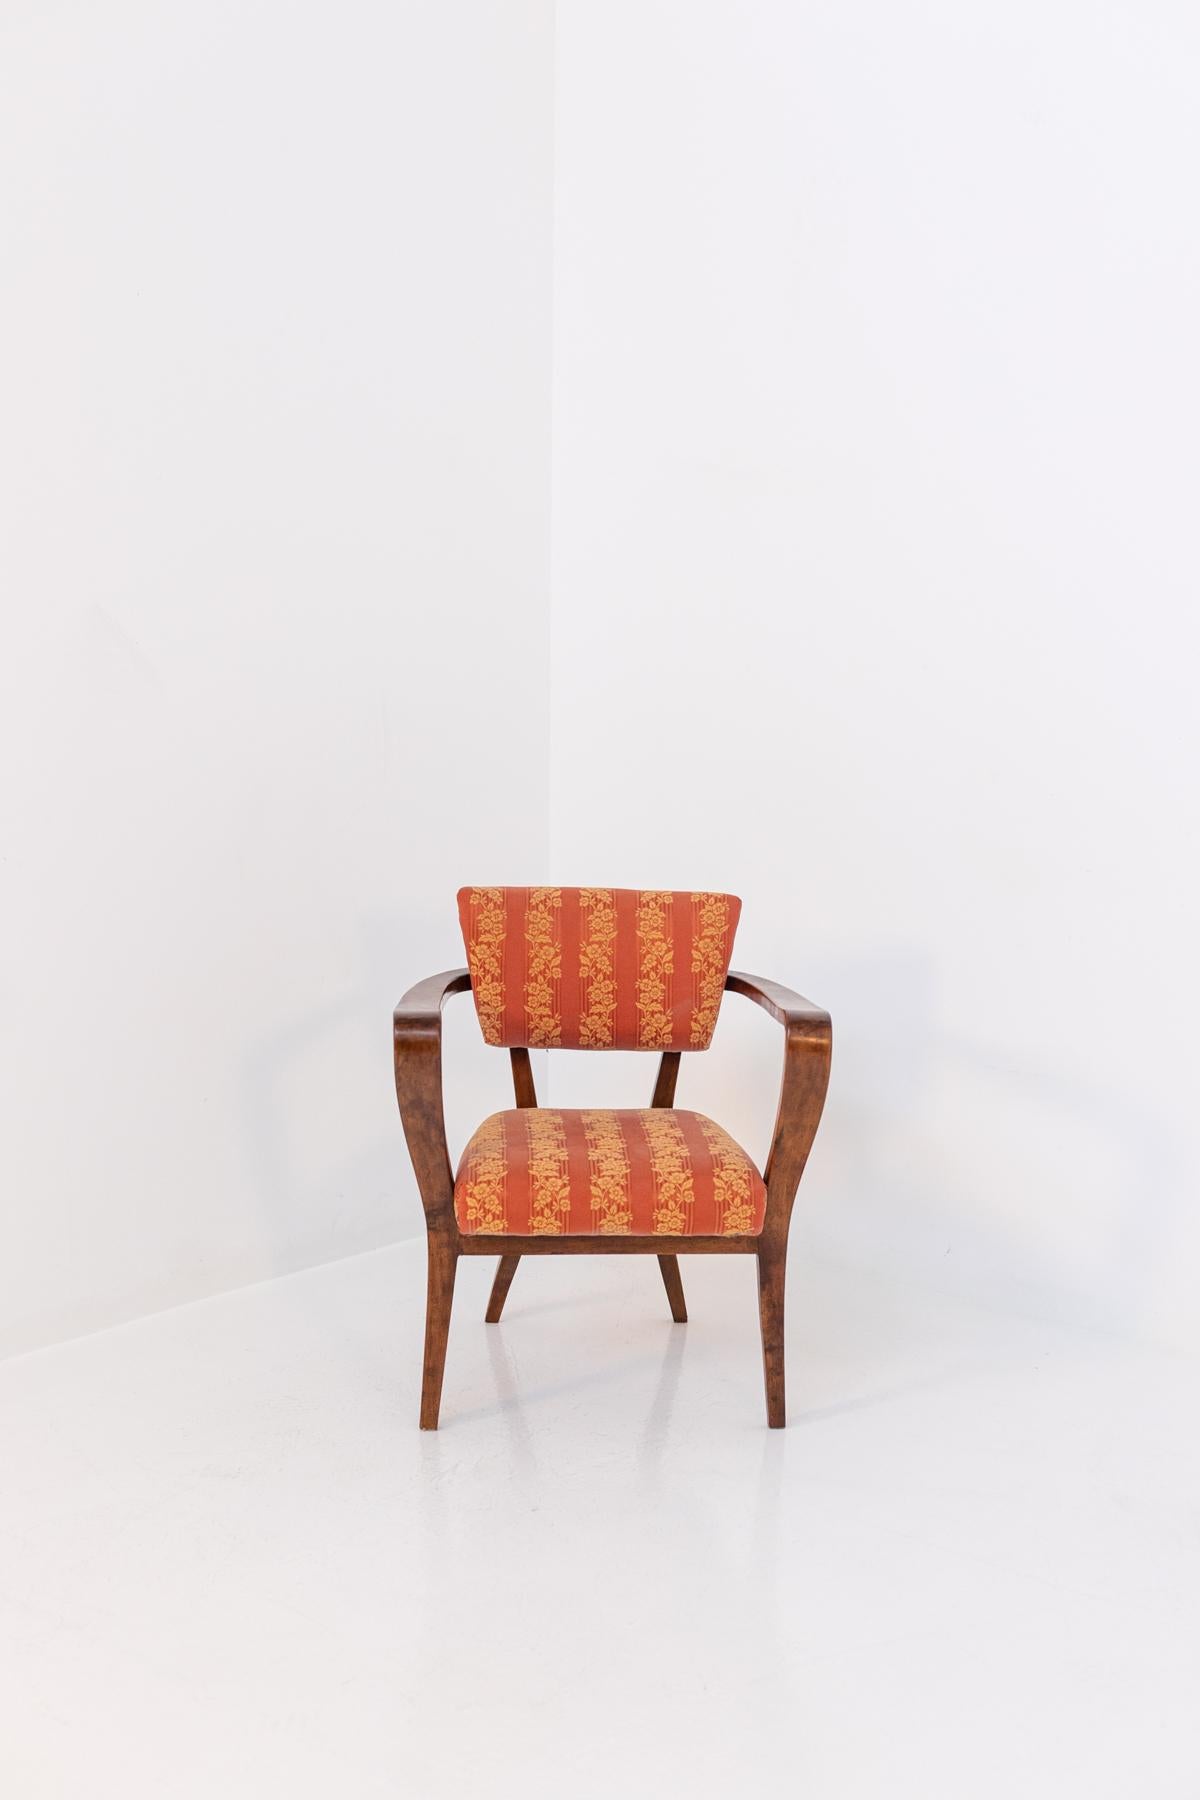 Italian Chair designed by Gio Ponti for Gastone Rinaldi, Published 6